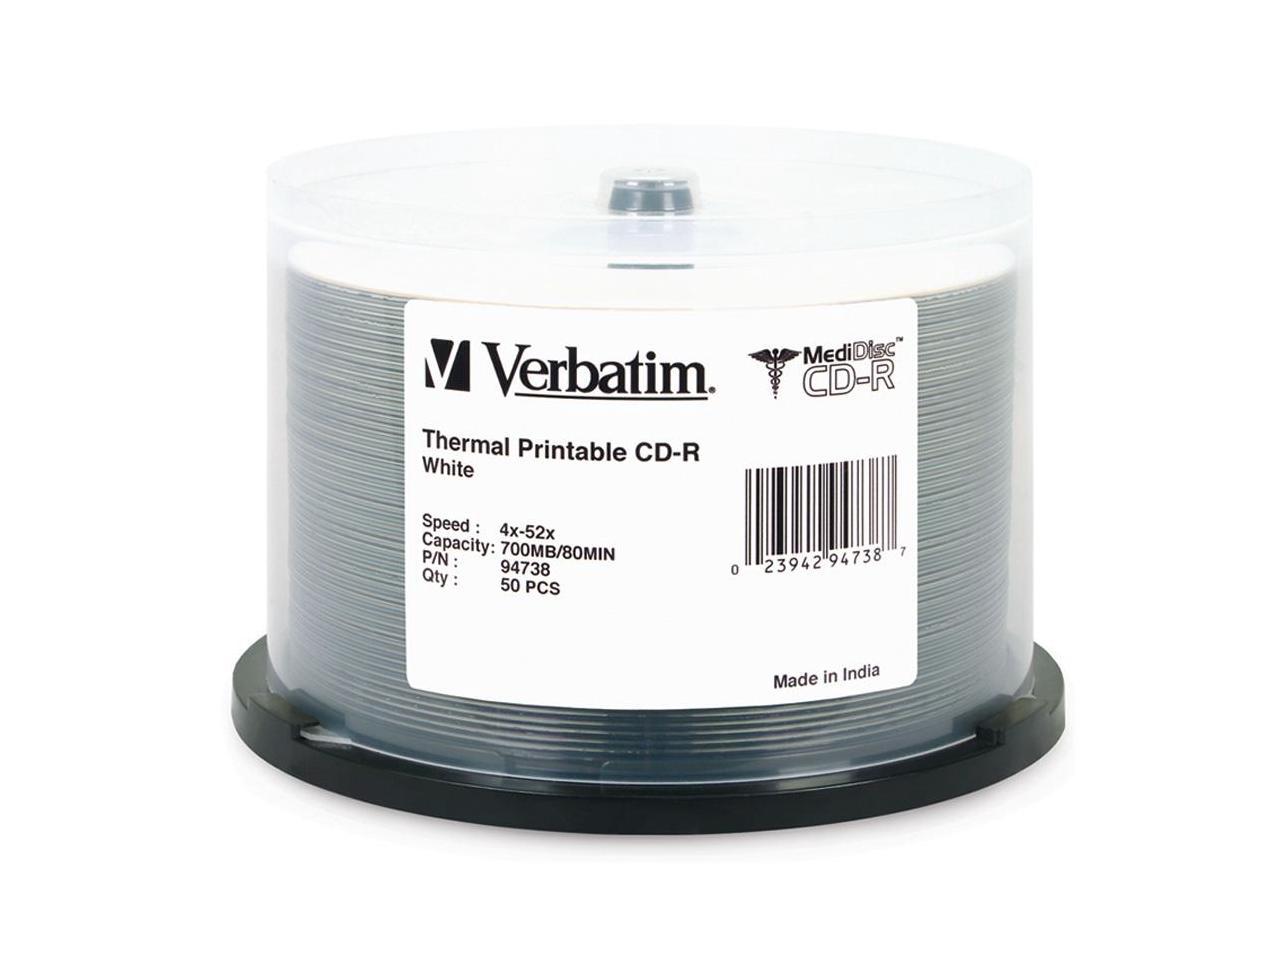 verbatim-700mb-52x-cd-r-thermal-printable-50-packs-medidisc-media-model